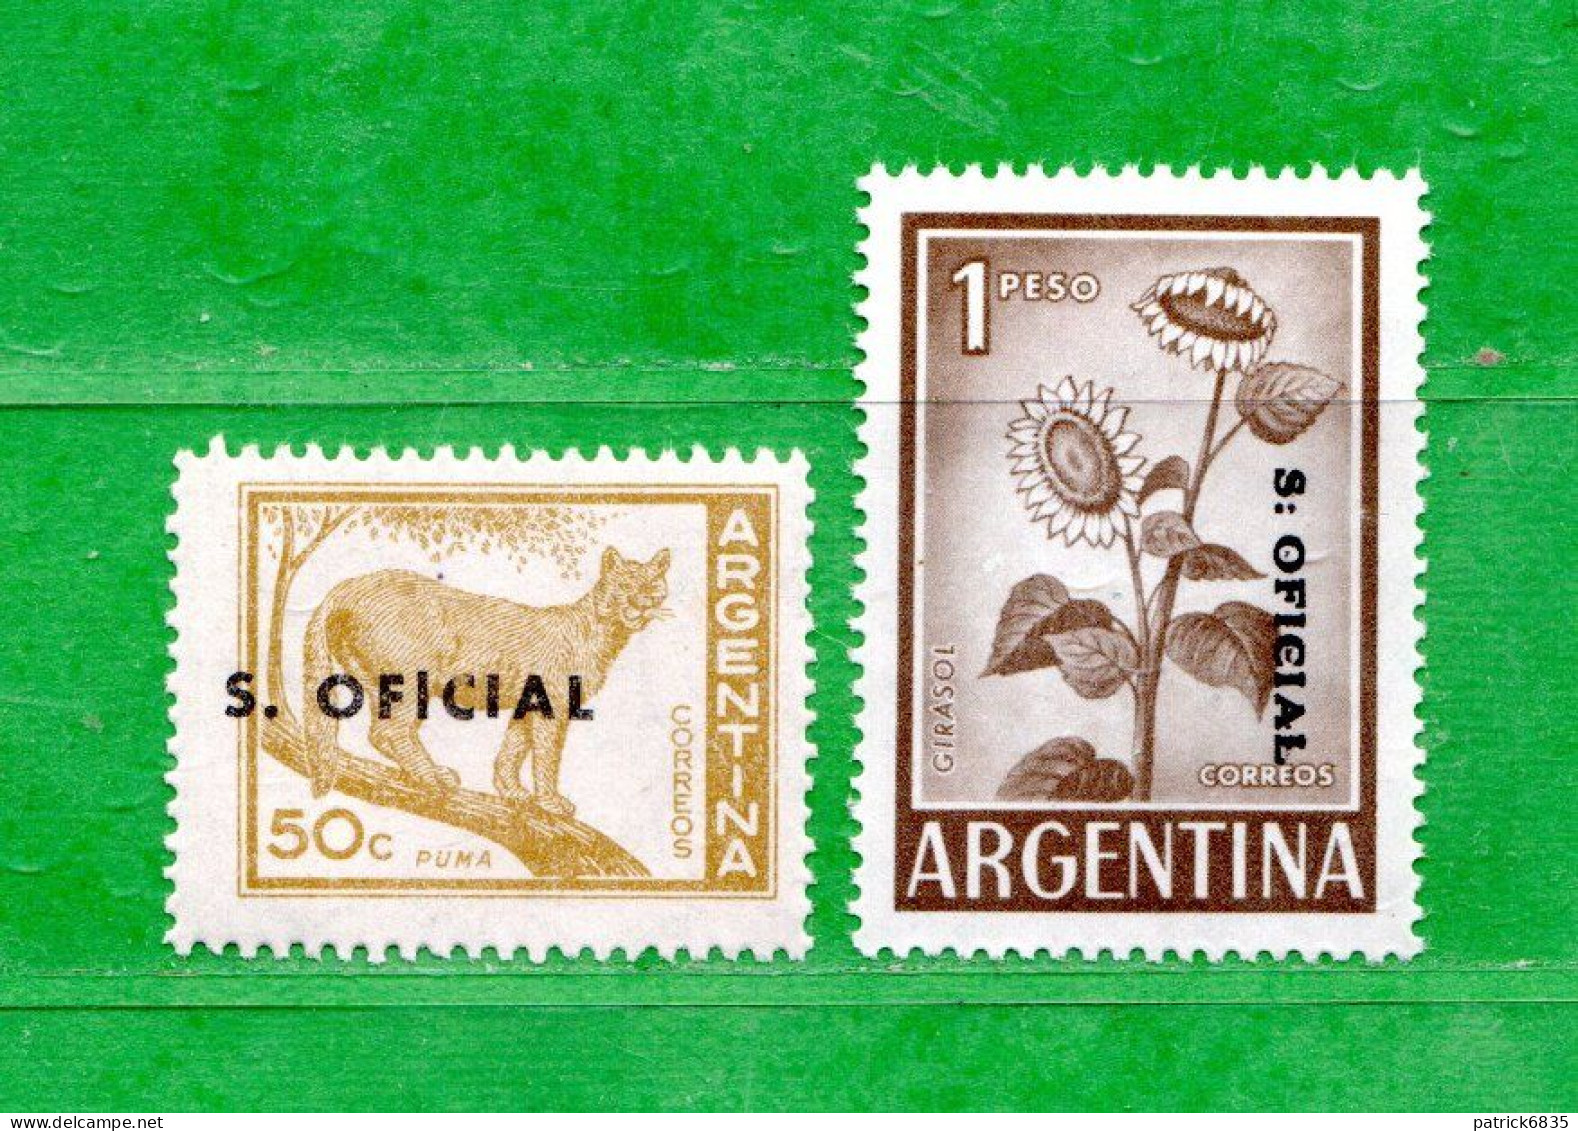 (Mn.1 ) Argentina - ** 1959- S.OFICIAL - PUMA - Tournesol.  Yvert  383-386A.  MNH** - Service